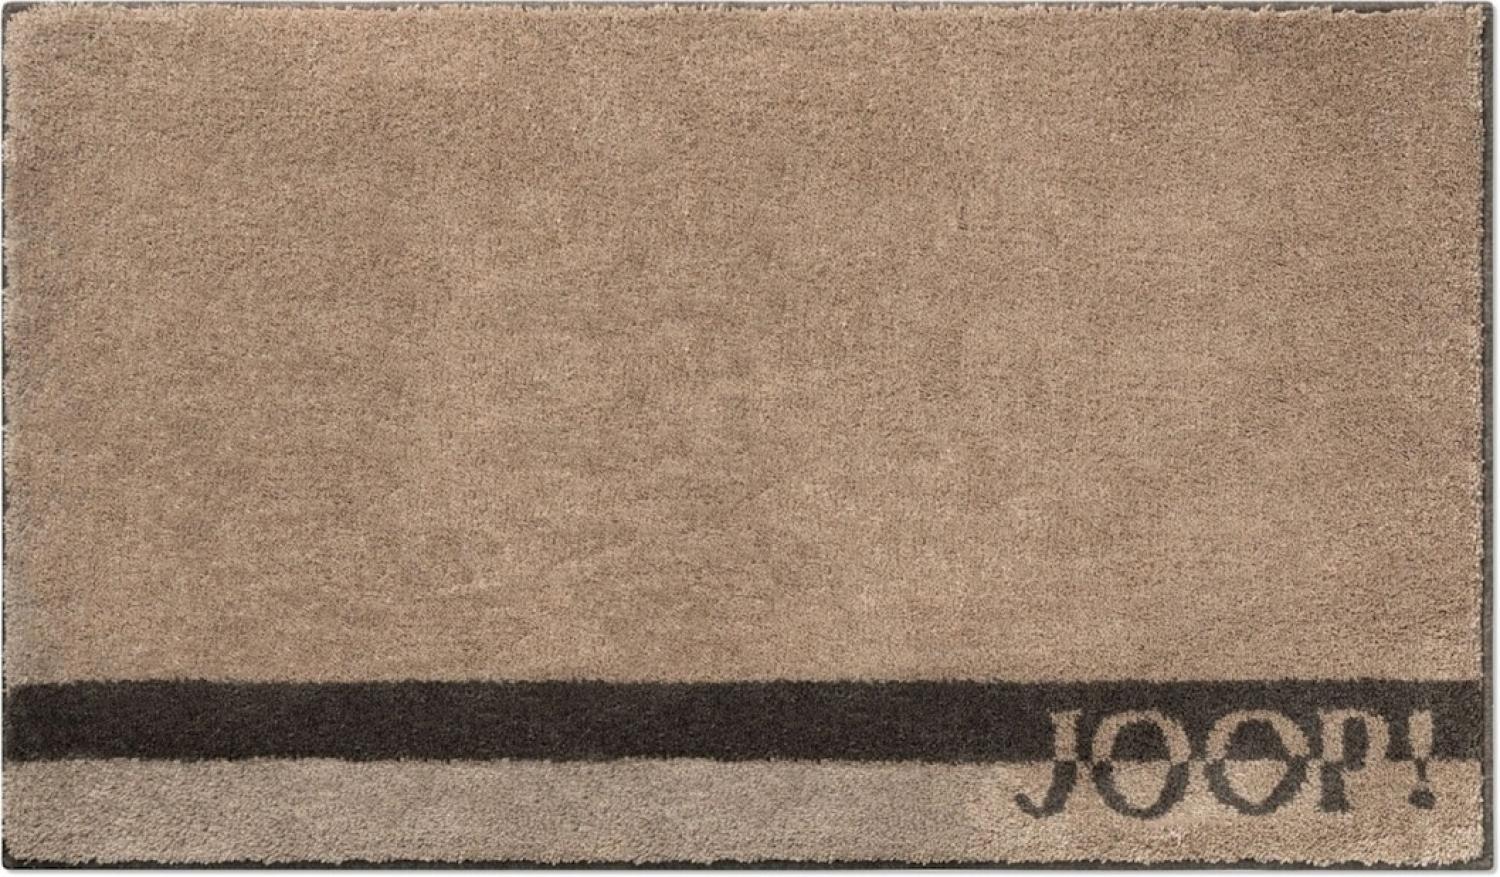 JOOP! Badteppich 141 LOGO STRIPES Sand 60 x 90 cm Bild 1